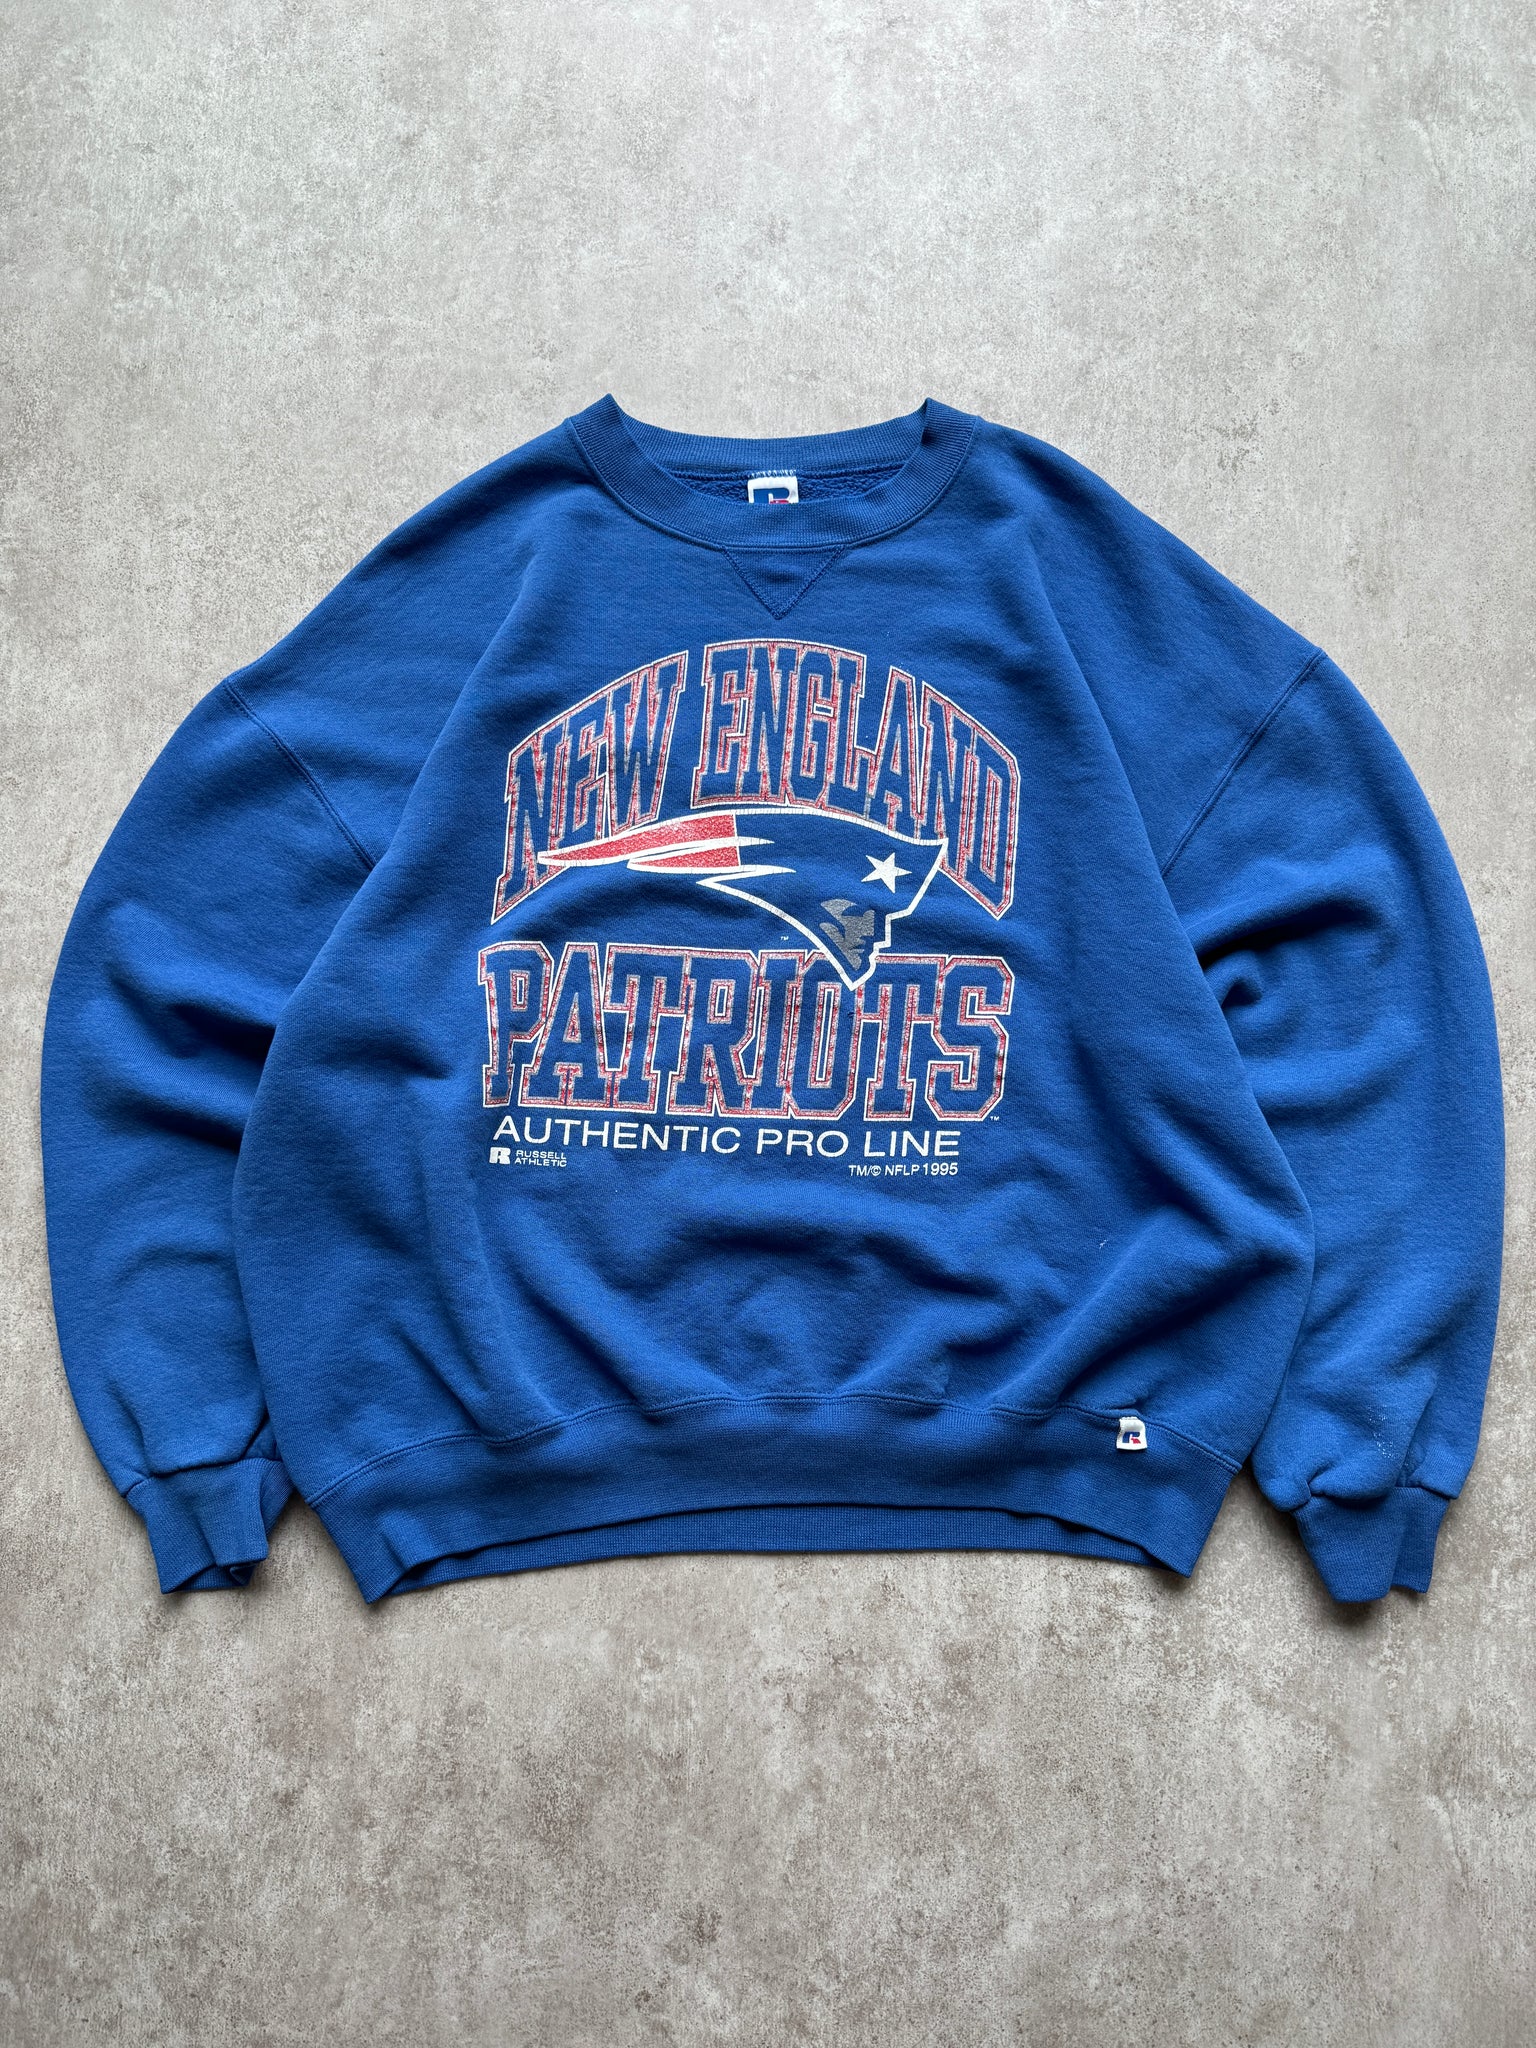 Vintage New England Patriots Pro Line Sweatshirt (XL)